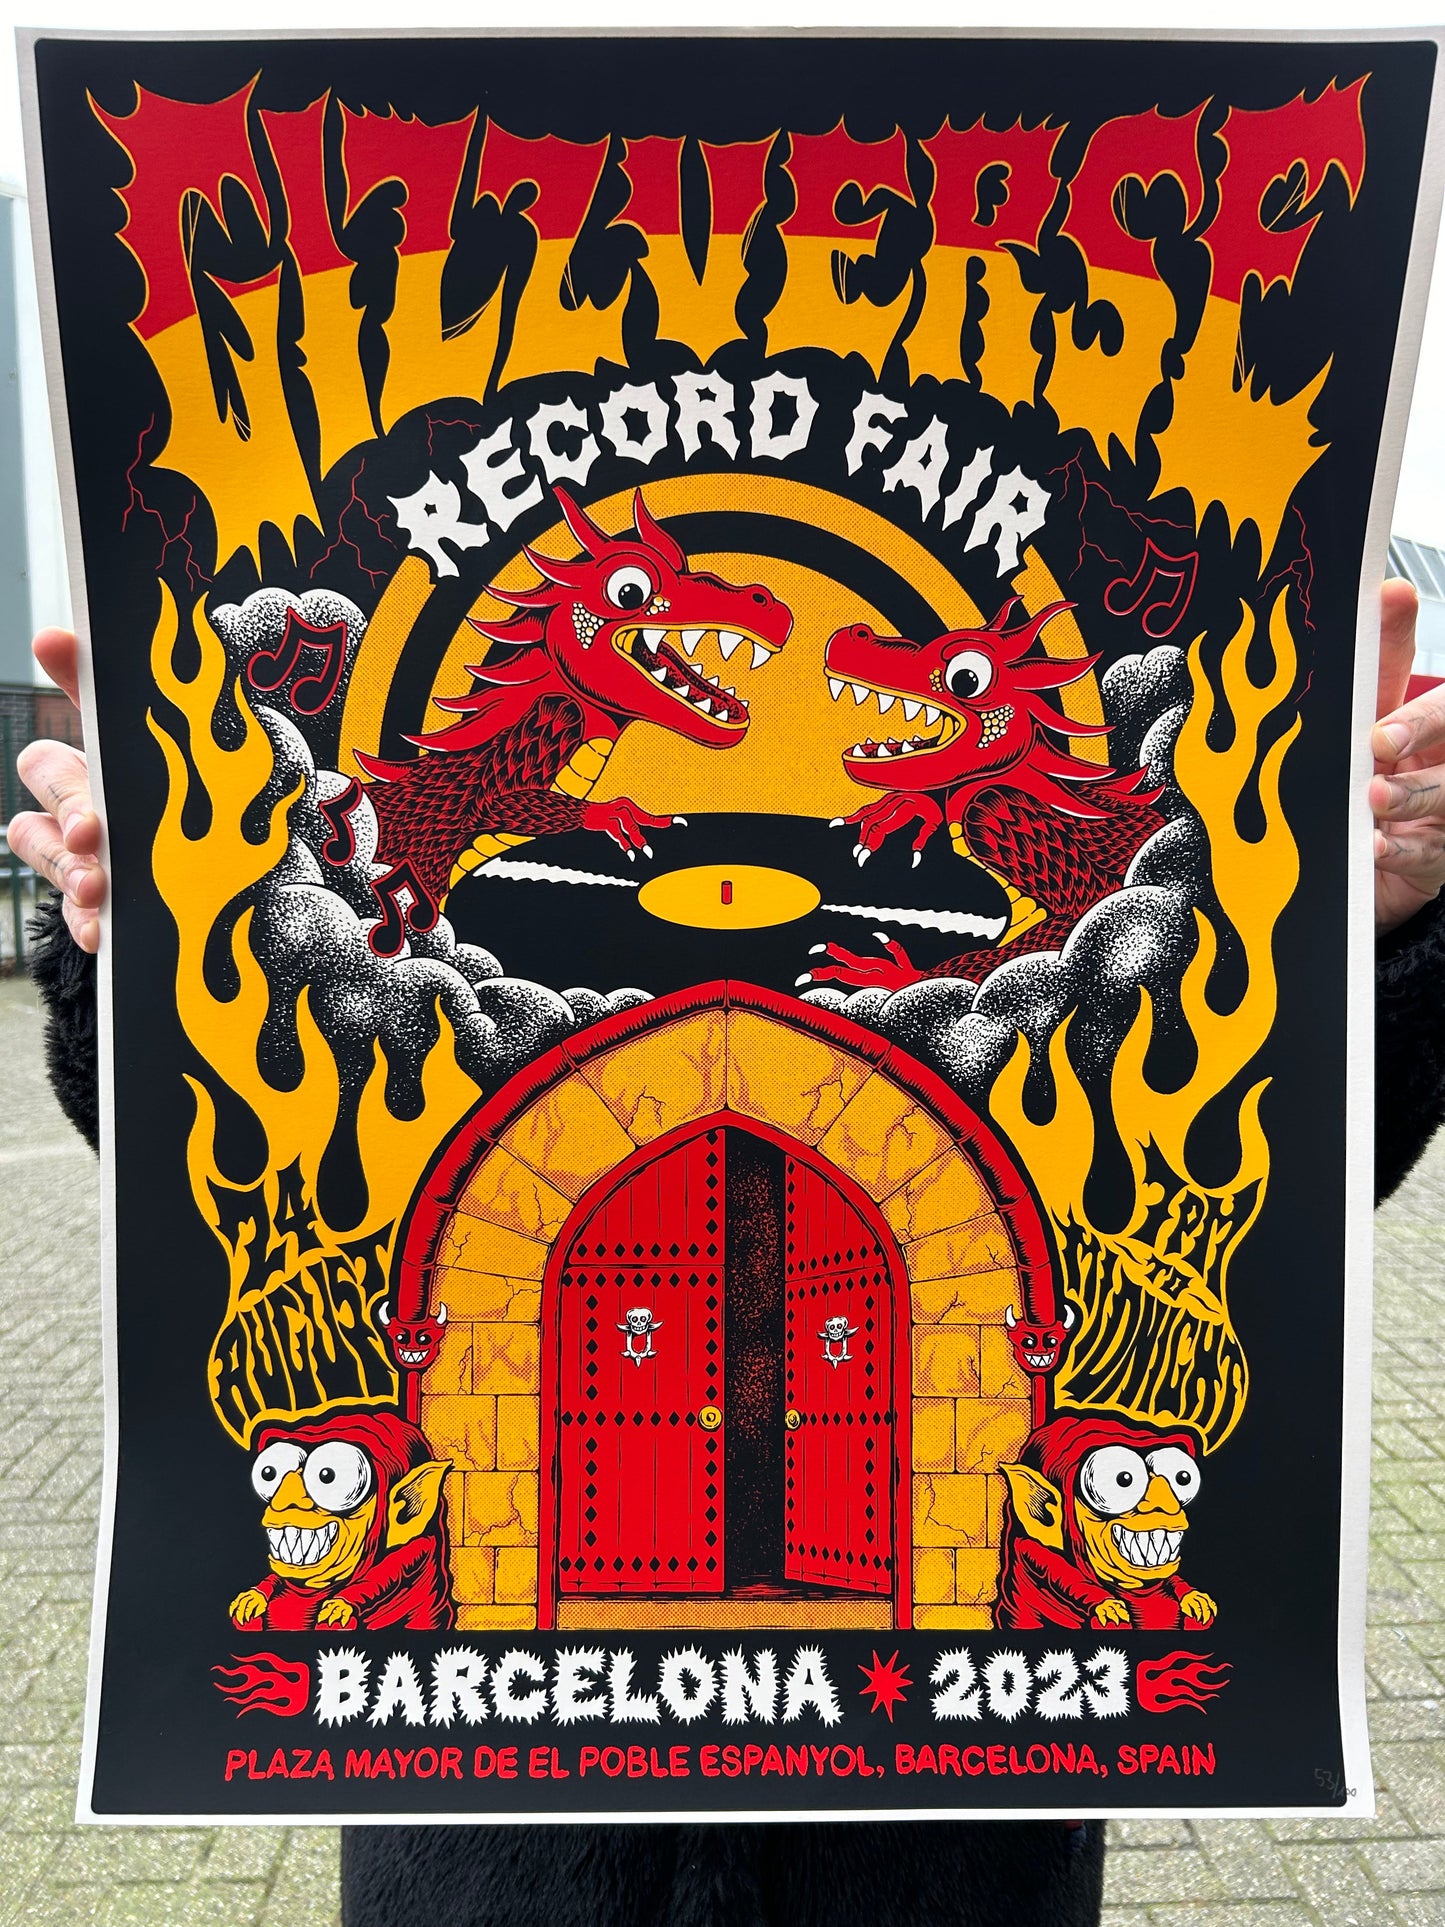 Gizzverse Record Fair - Barcelona Plaza Mayor De El Poble Espanyol - 24th August 2023 Poster